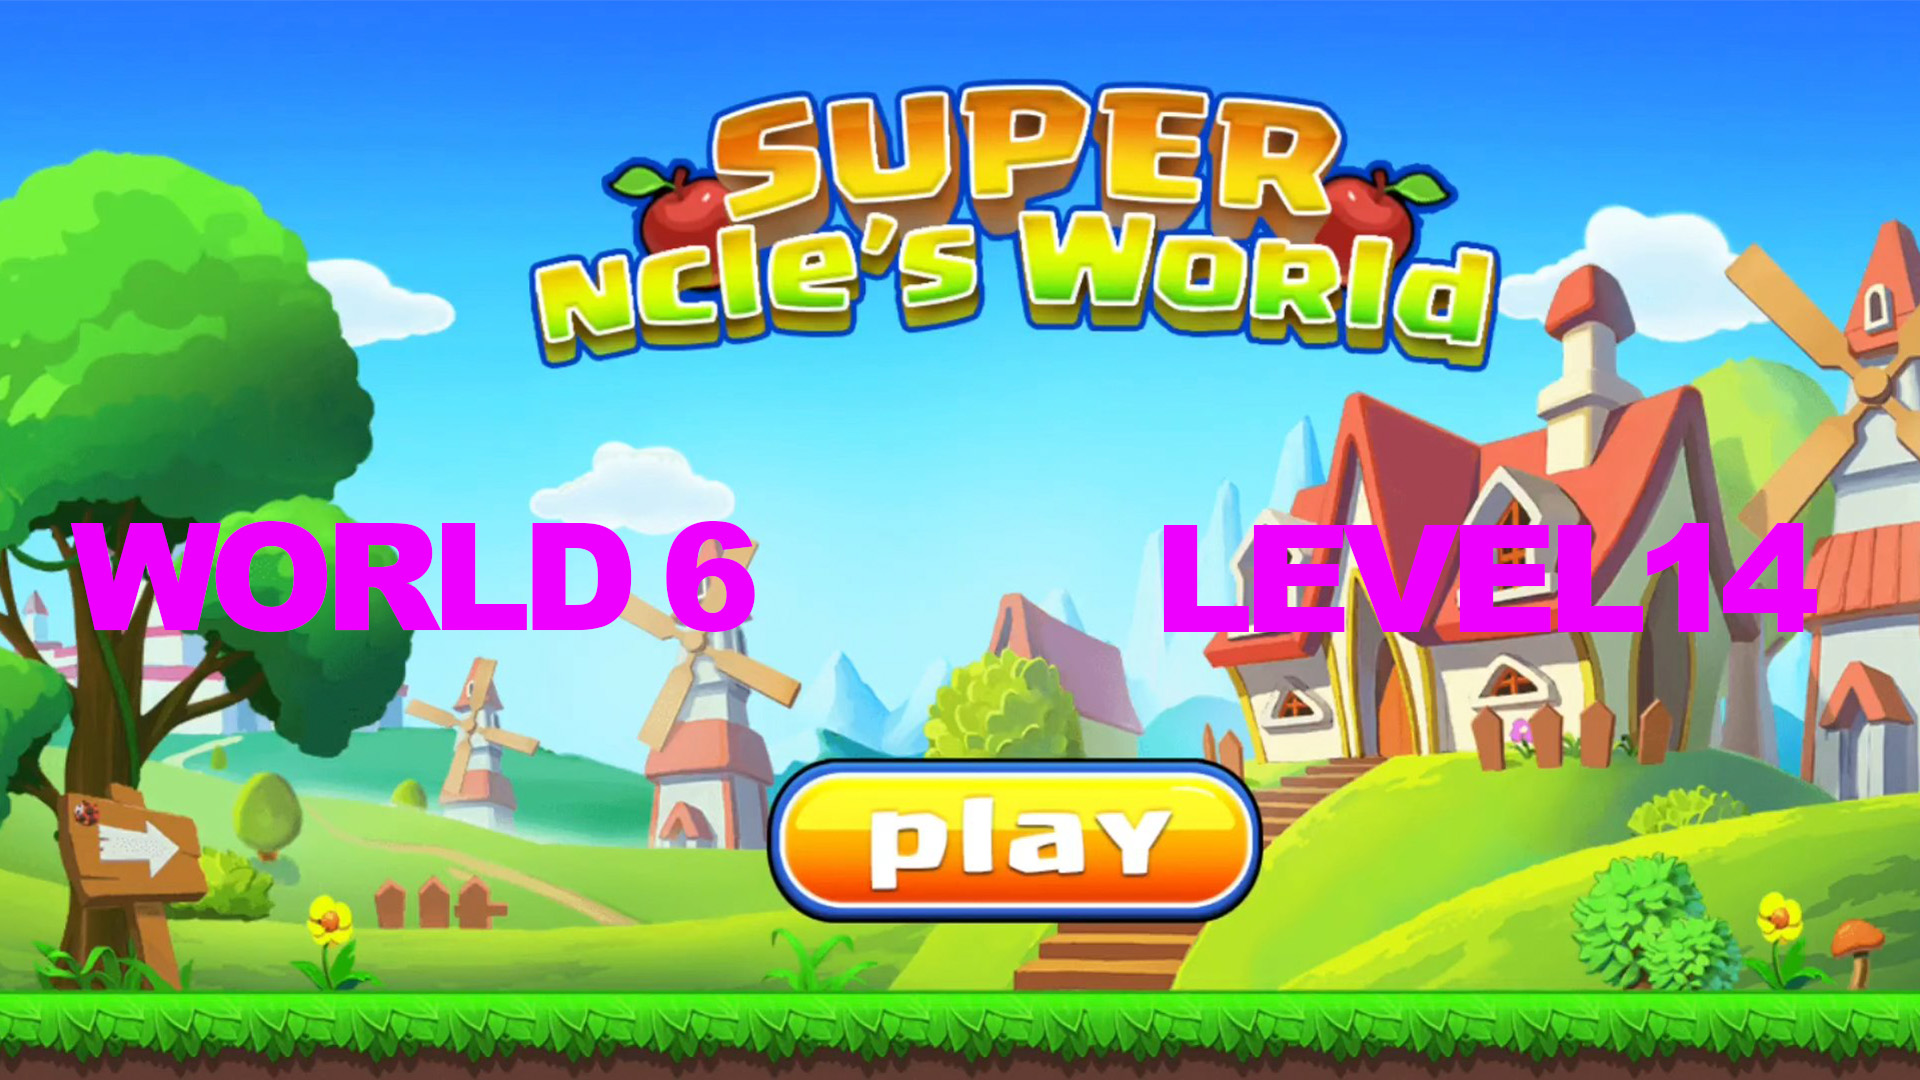 Super ncle's  World 6. Level 14.